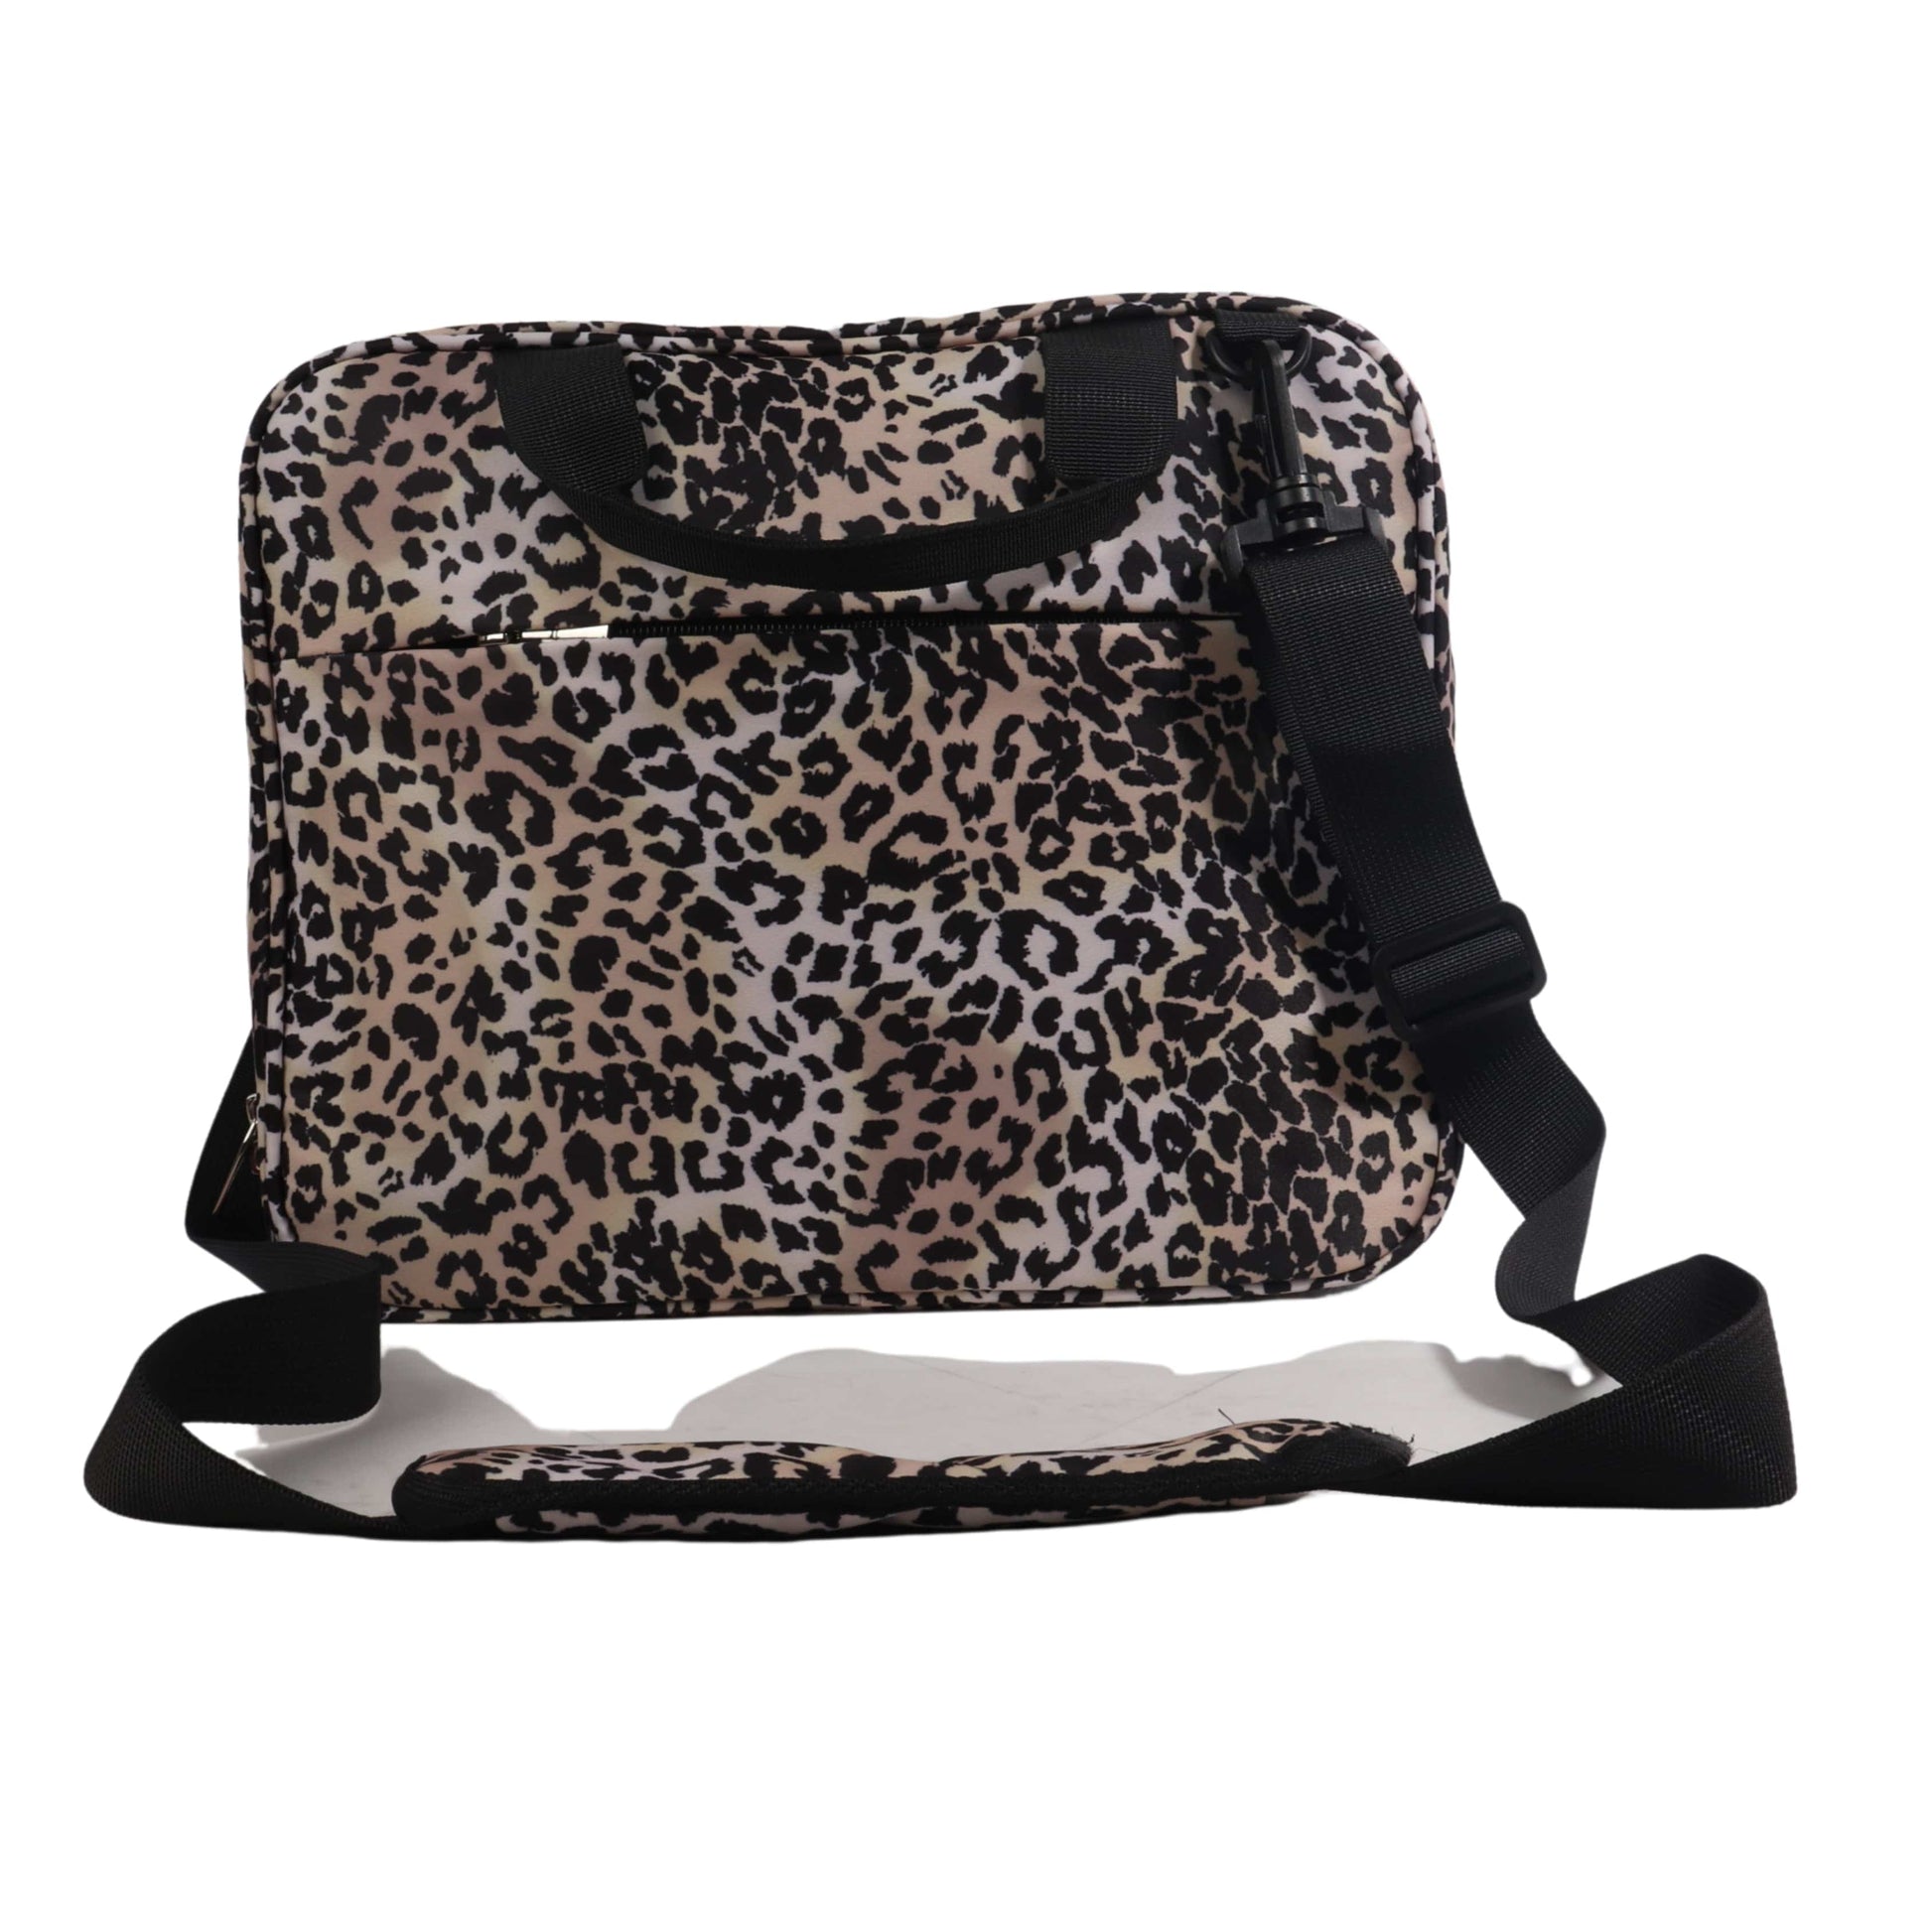 FINPAC Laptops & Accessories Multi-Color FINPAC - Laptop Case Bag Leopard Animal Skin Print